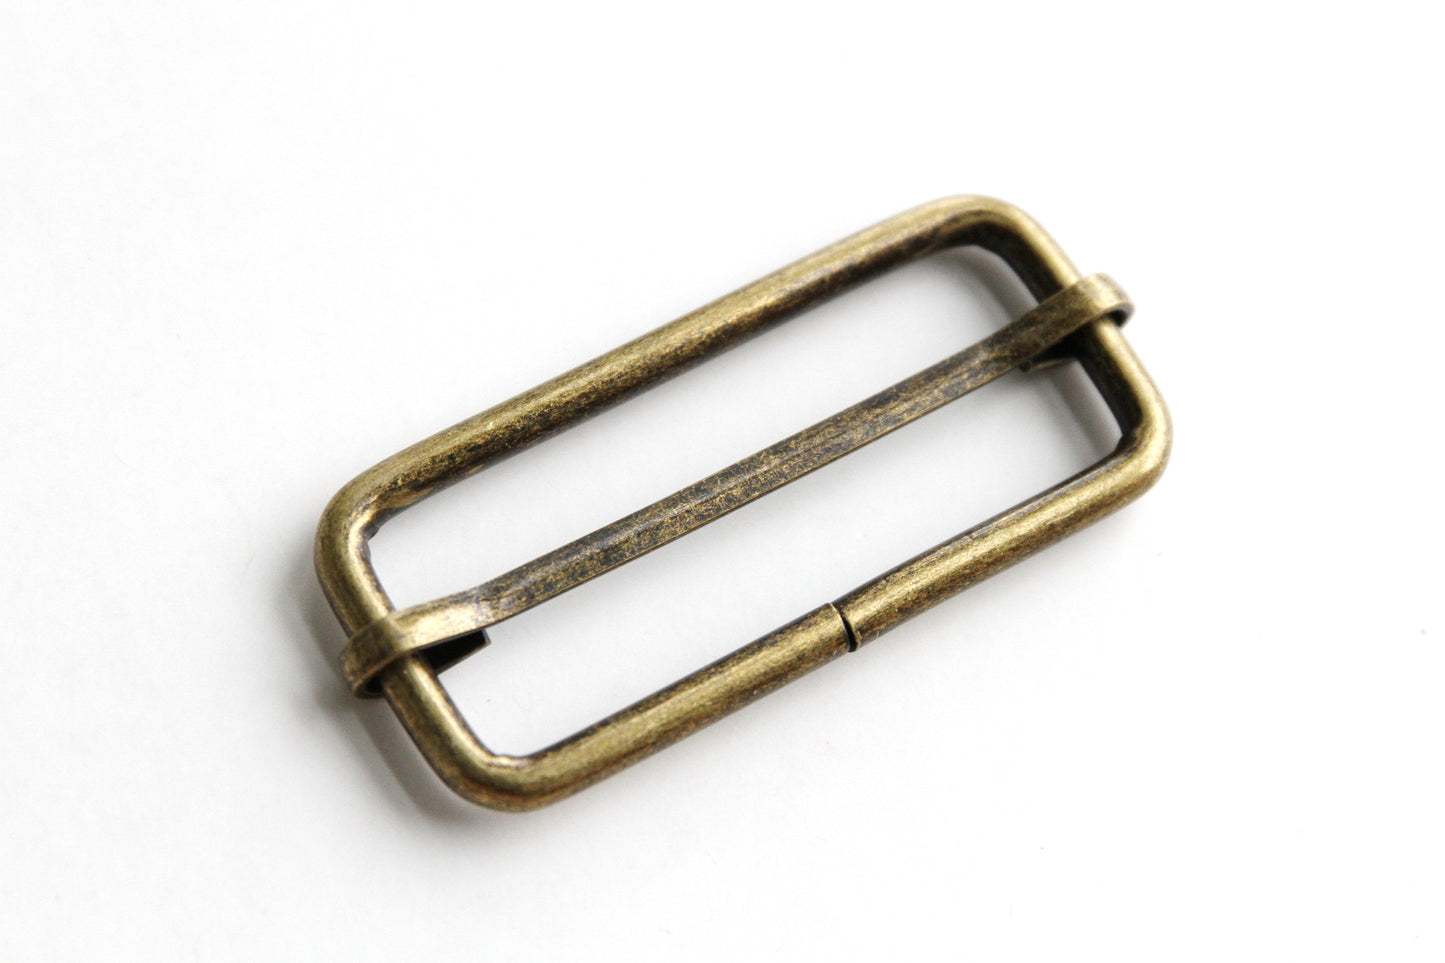 Rectangular Slider - 2 inch, One Movable Pin, Brass - KEY Handmade
 - 2